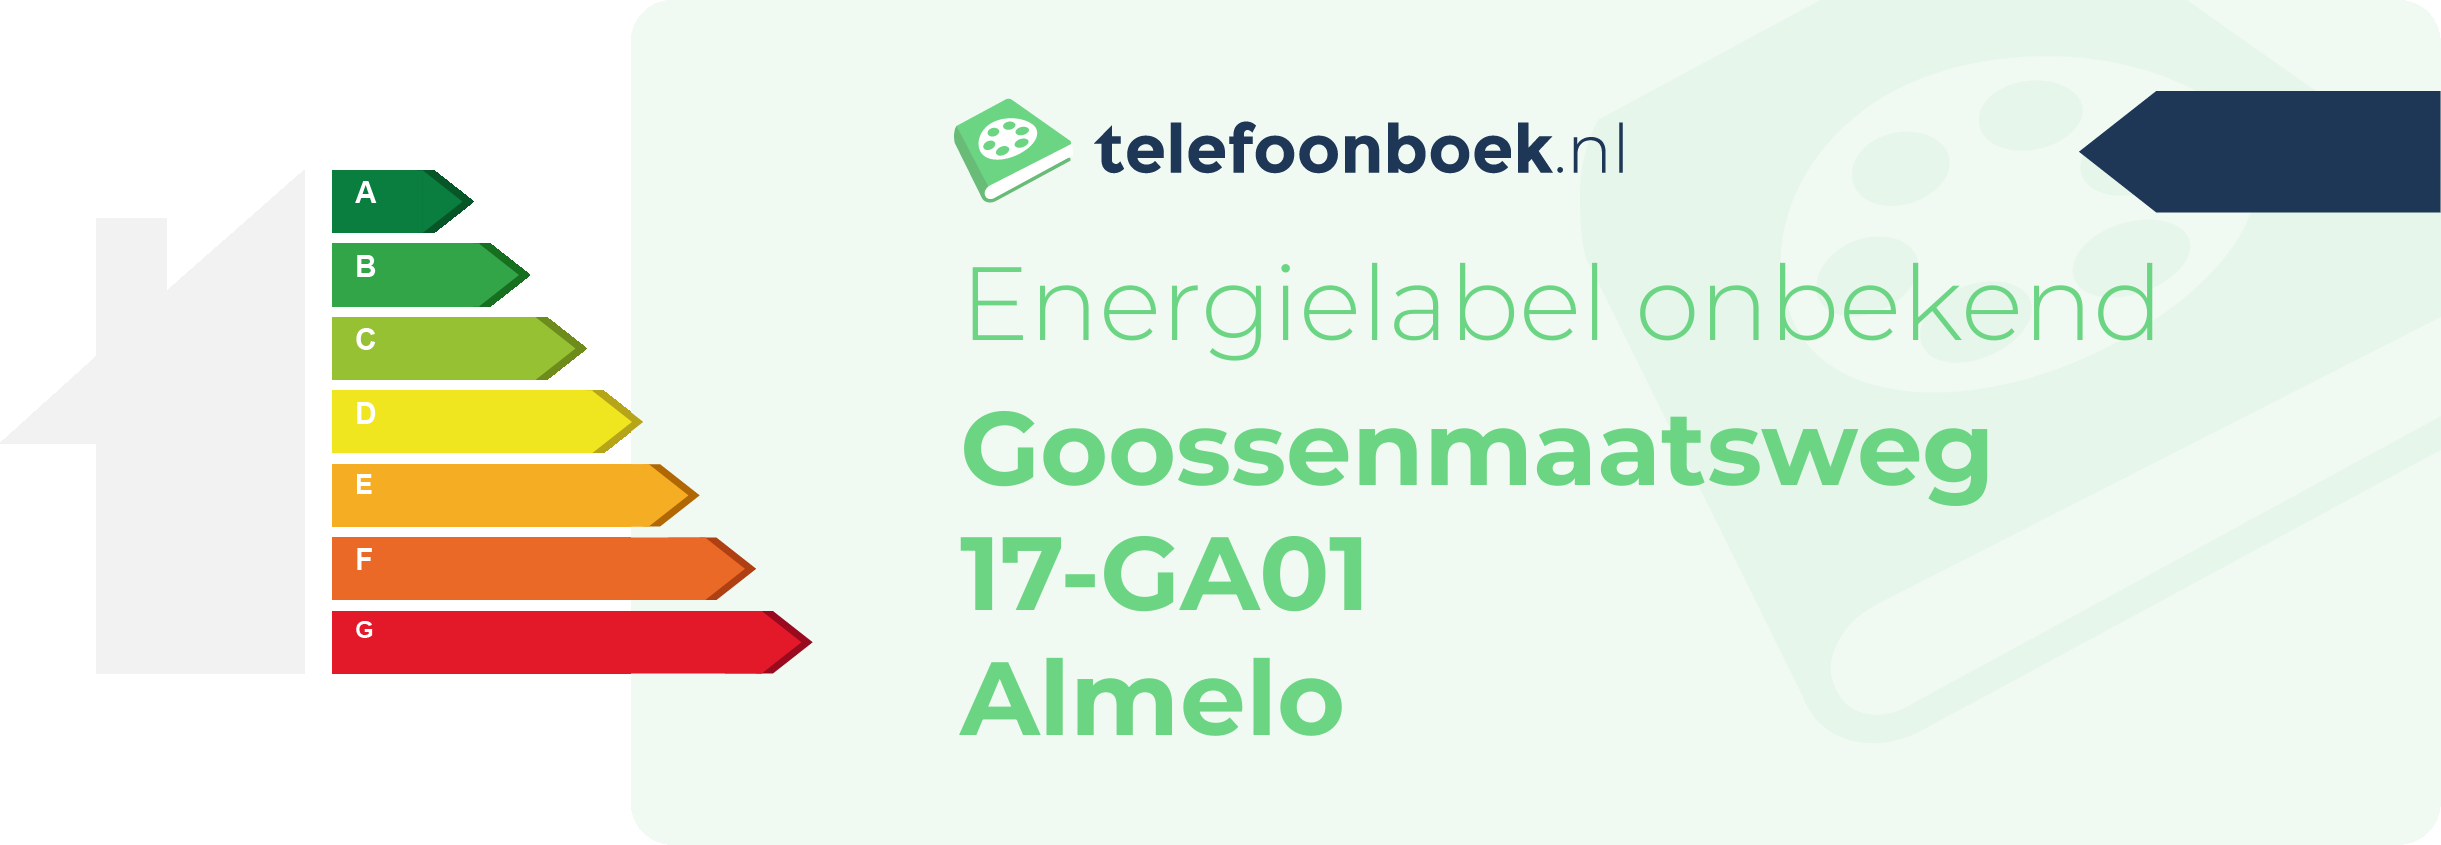 Energielabel Goossenmaatsweg 17-GA01 Almelo